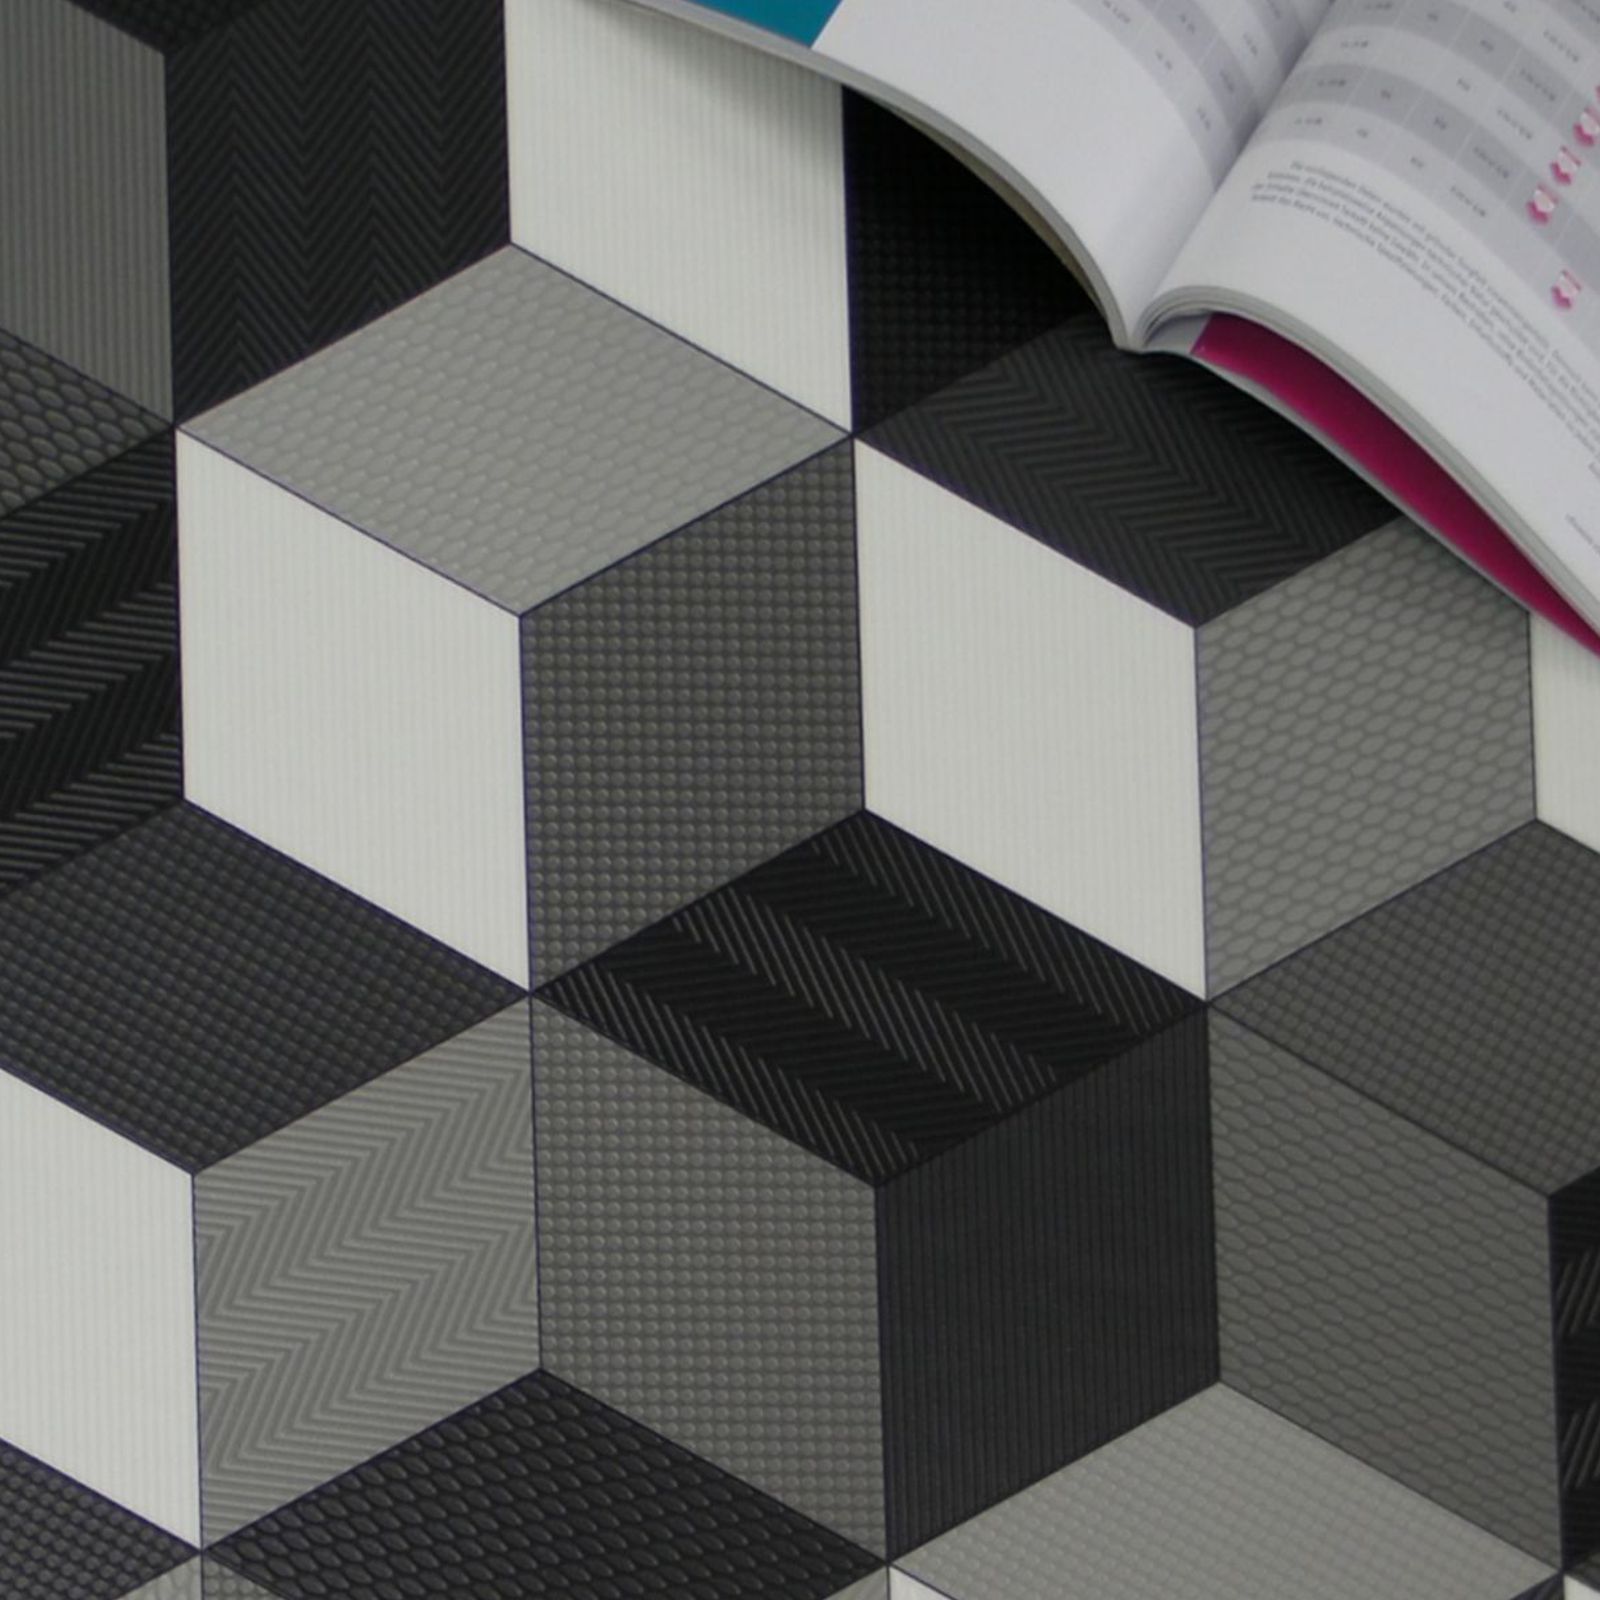 PVC Bodenbelag Cube 3D Würfel Schwarz Weiß Grau - Muster